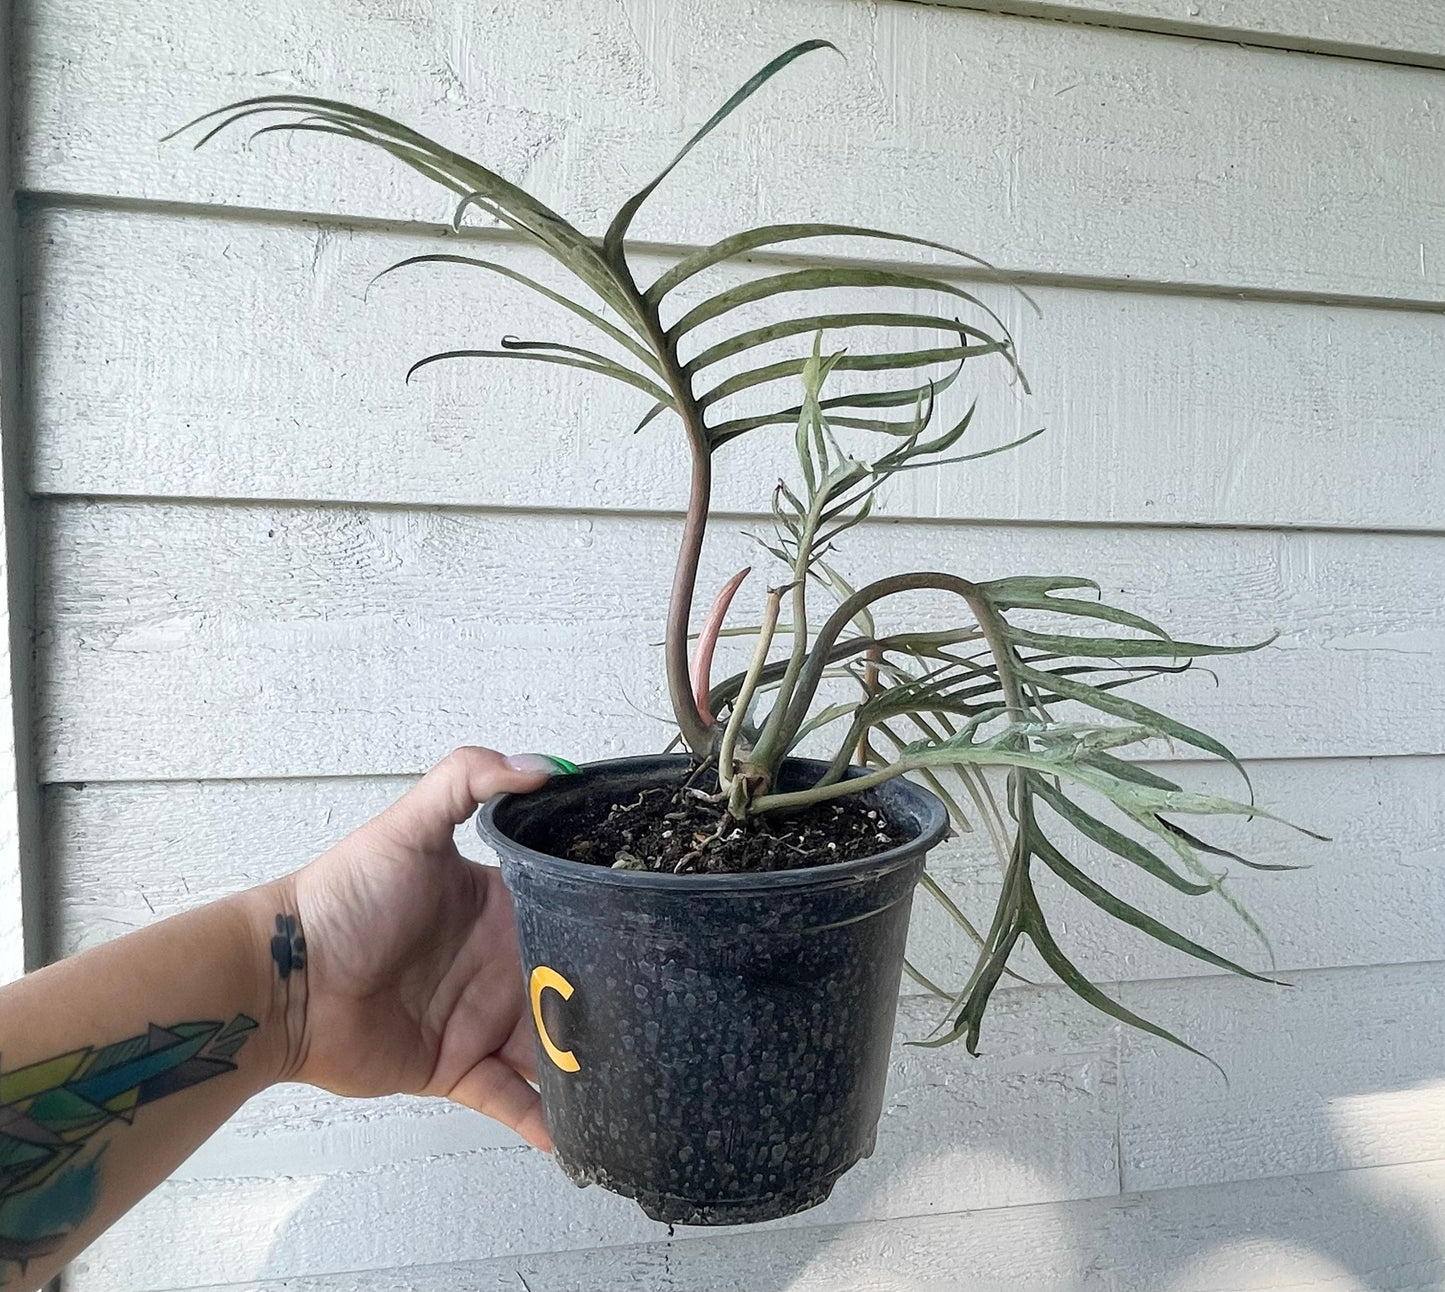 Philodendron Tortum “6 (Philodendron bipinattifidum)